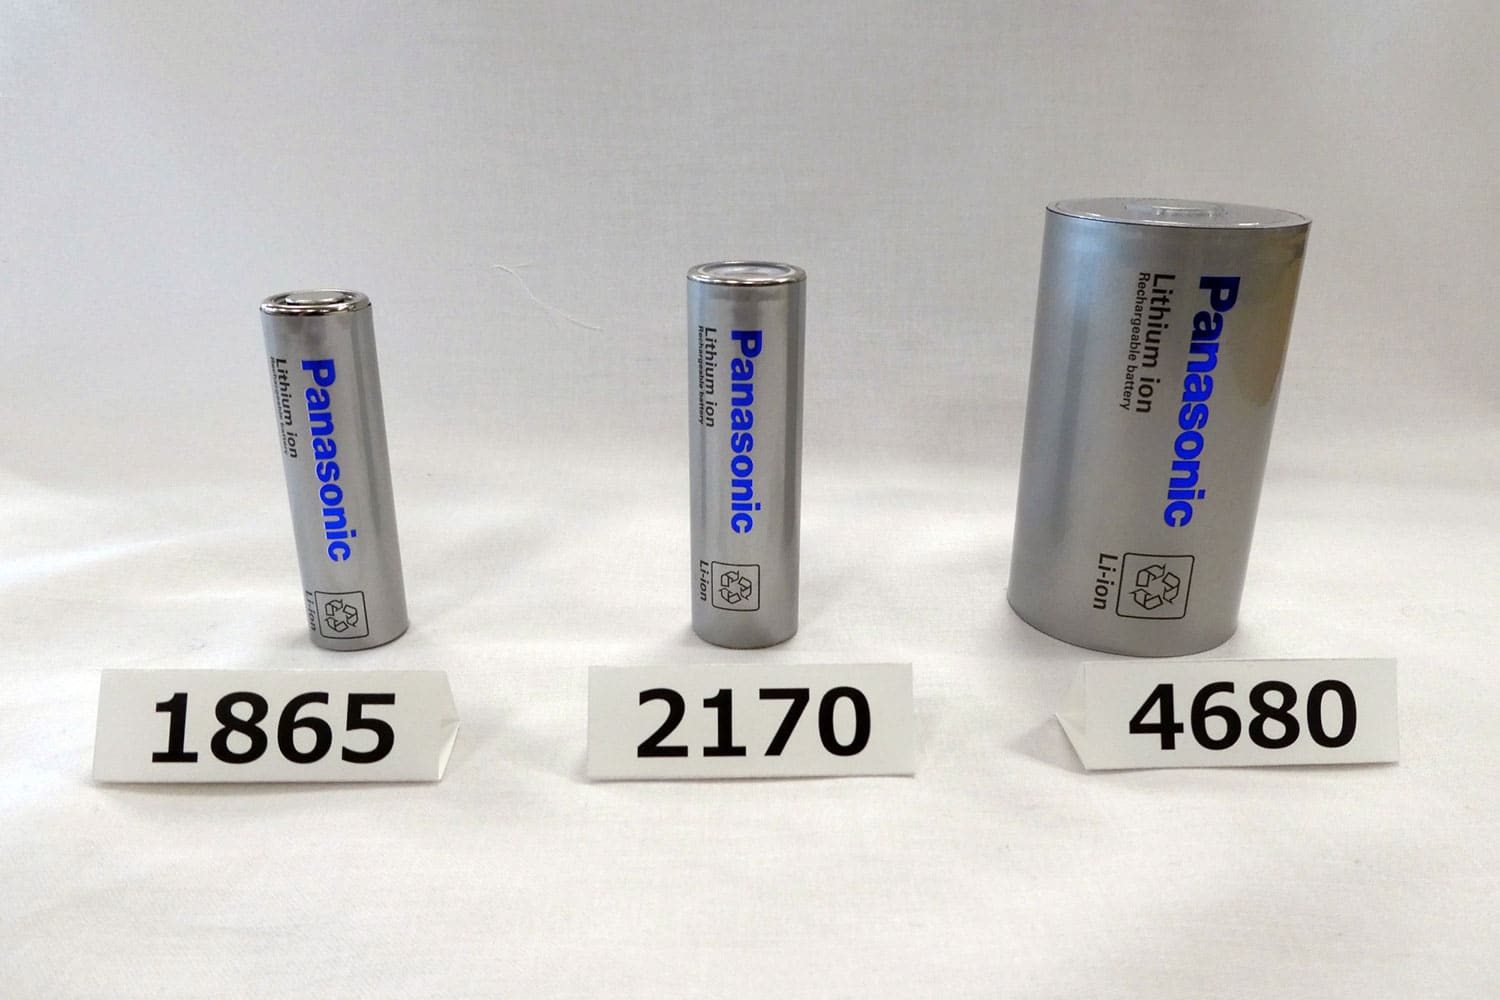 A prototype of Panasonic’s next-generation 4680 battery.